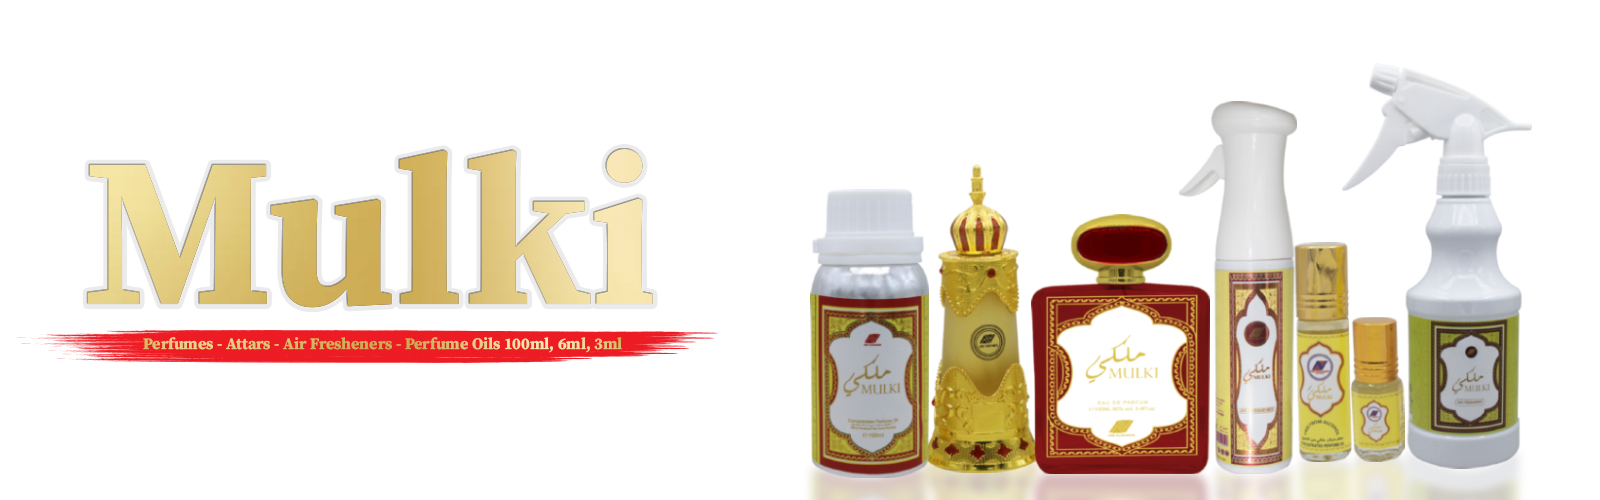 Mulki Perfume, Attar, Air Freshener, 100ml, 6ml, 3ml by ARD PERFUMES